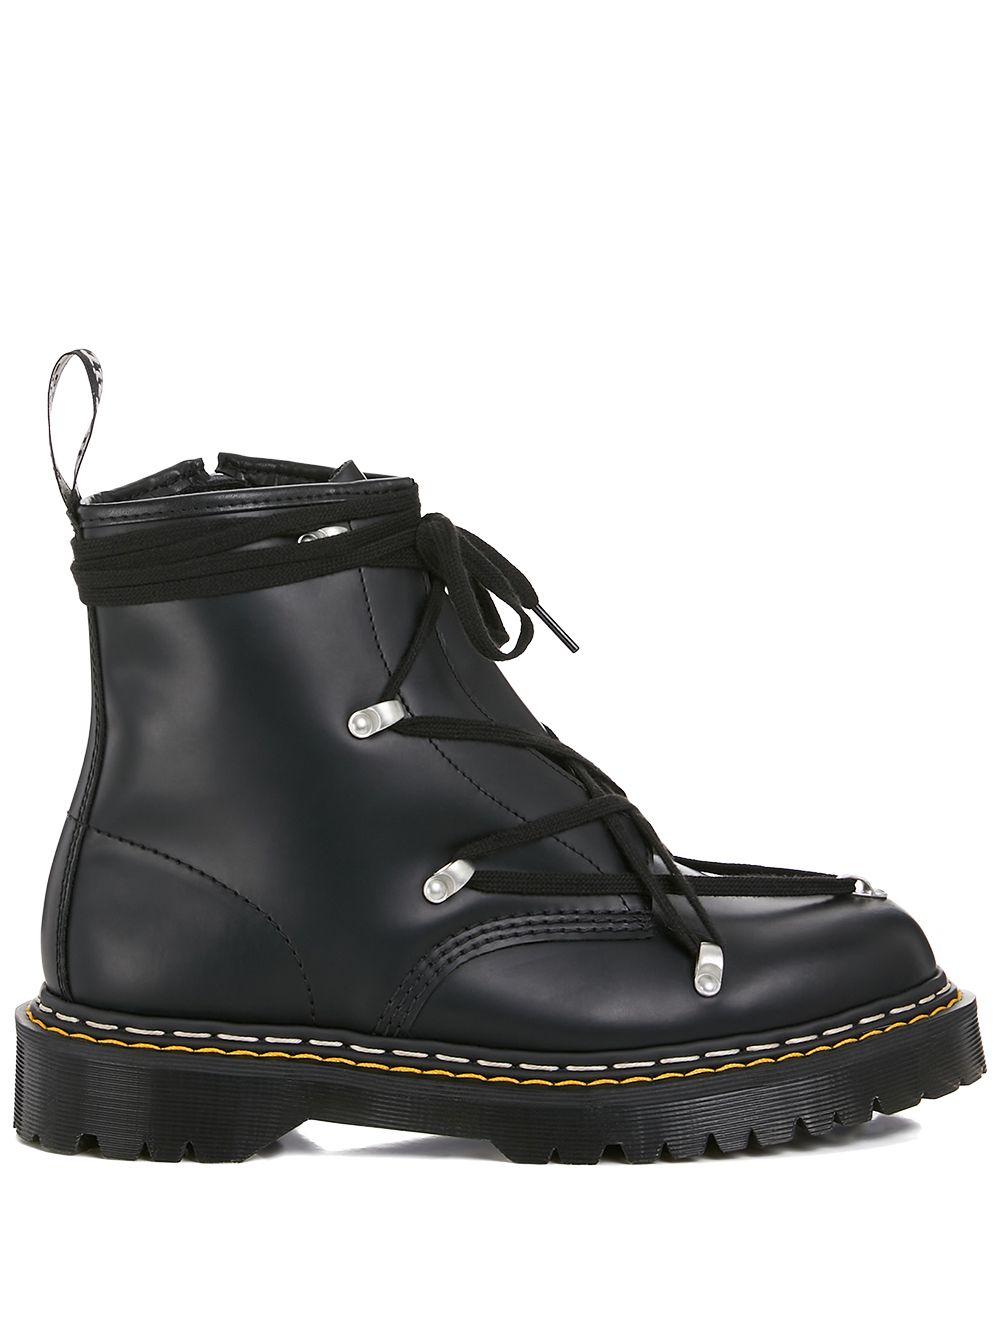 Rick Owens X Dr. Martens Black 1460 Bex Boots for Men | Lyst